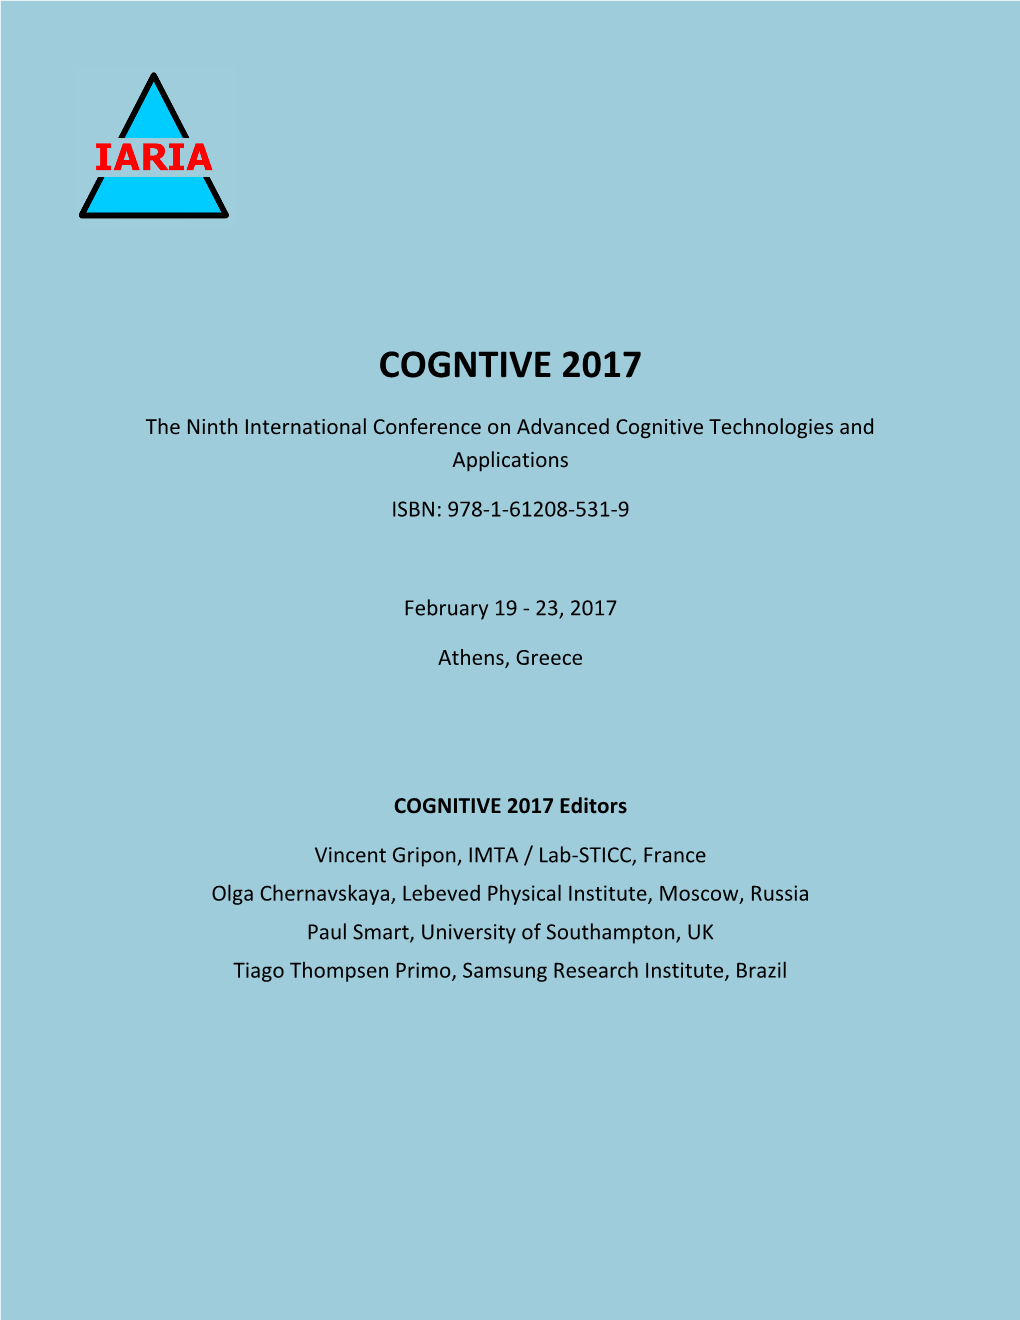 COGNITIVE 2017 Proceedings